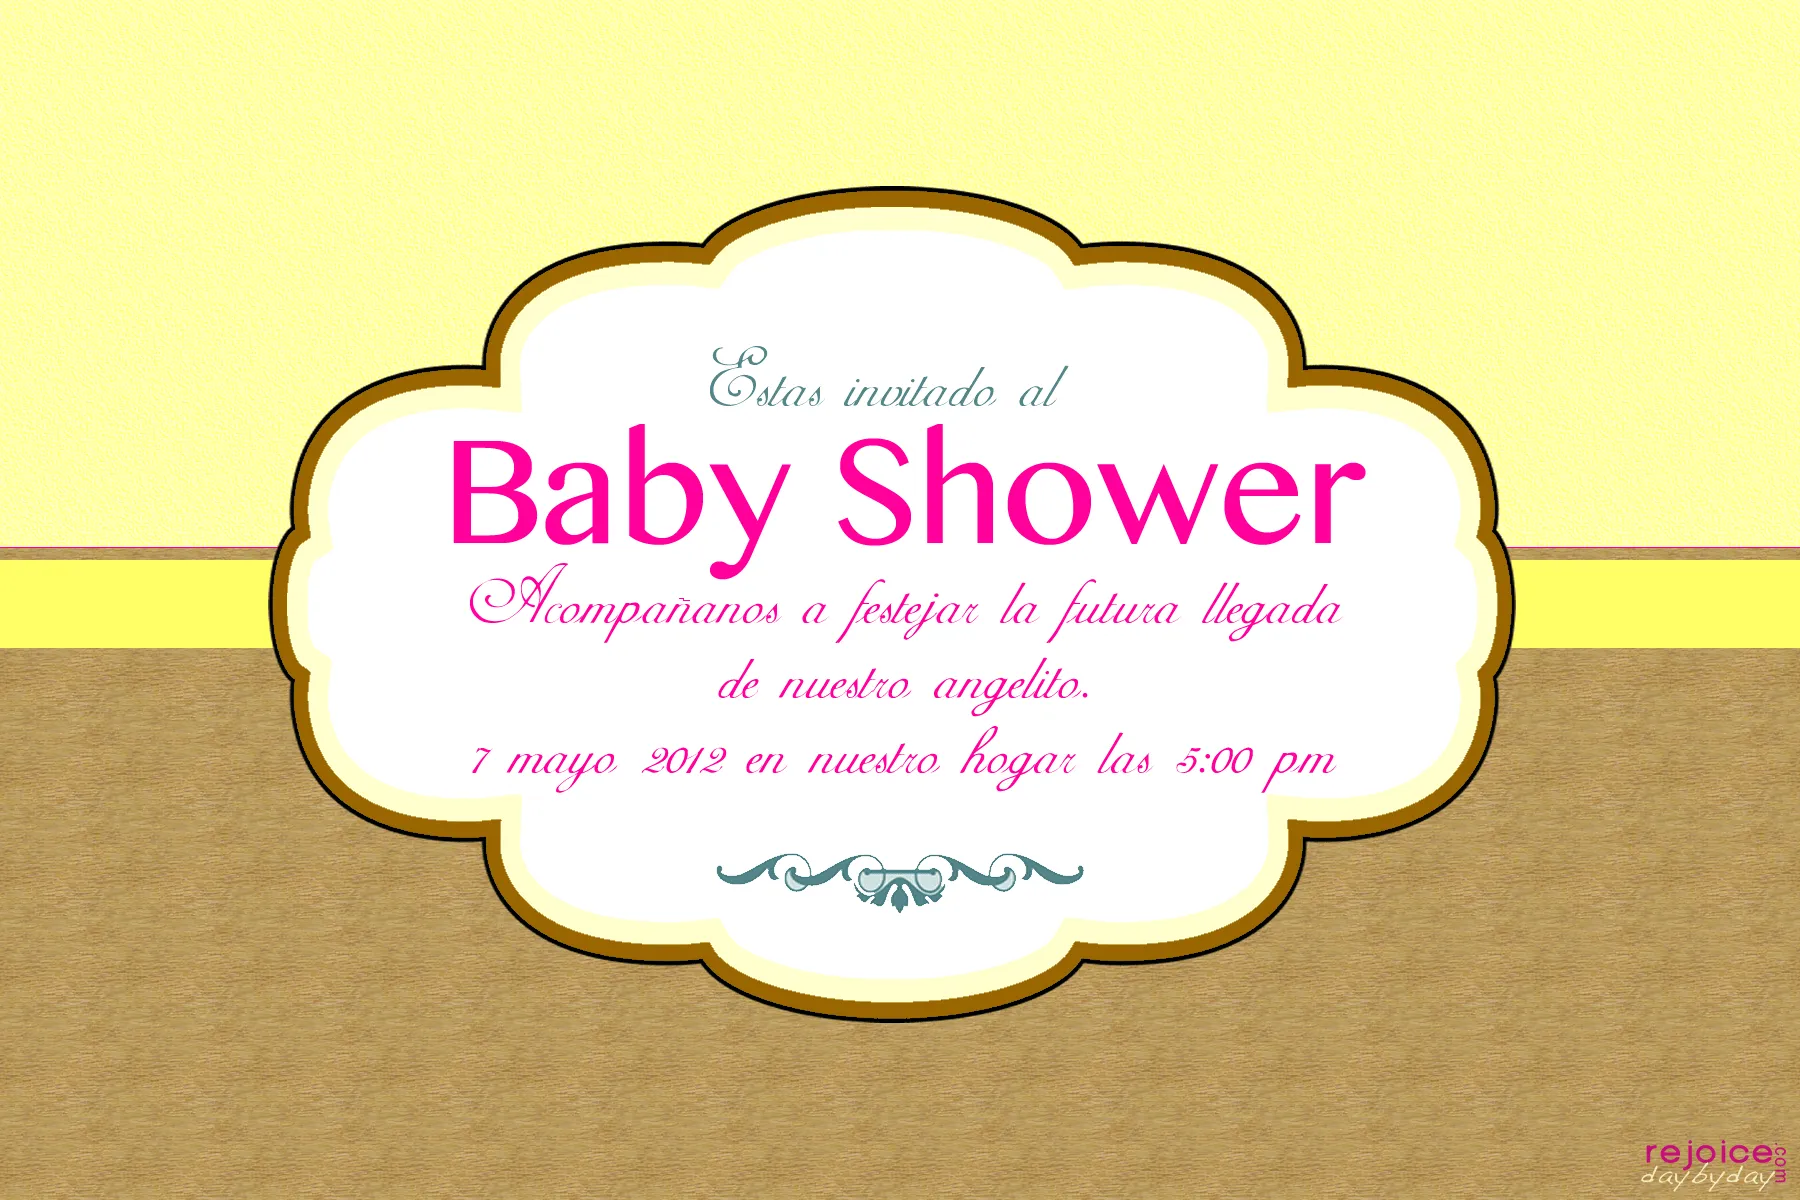 baby shower | Rejoice daybyday